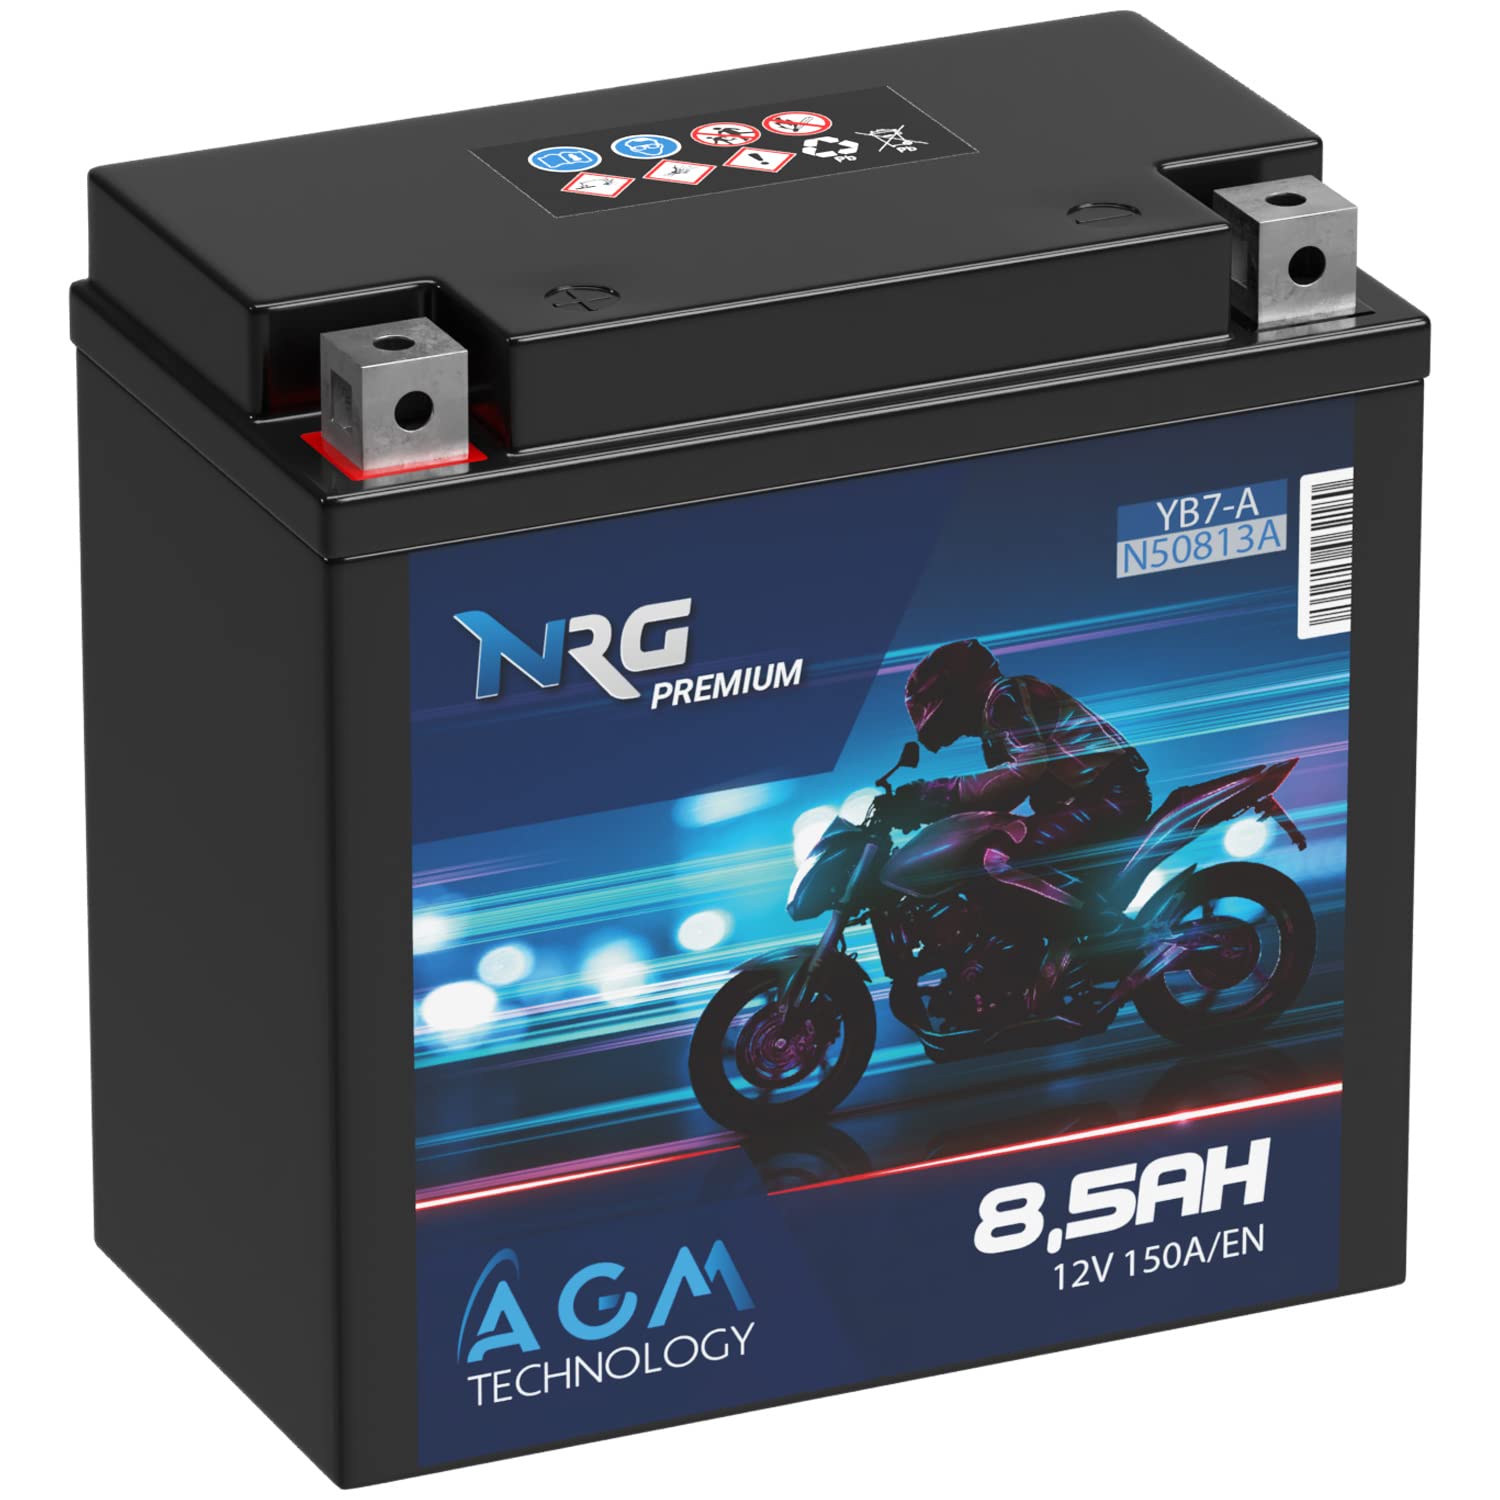 NRG Premium YB7-A AGM Motorradbatterie 8,5Ah 12V 150A/EN Batterie 50813 12N7-4A auslaufsicher wartungsfrei ersetzt 8Ah von NRG PREMIUM